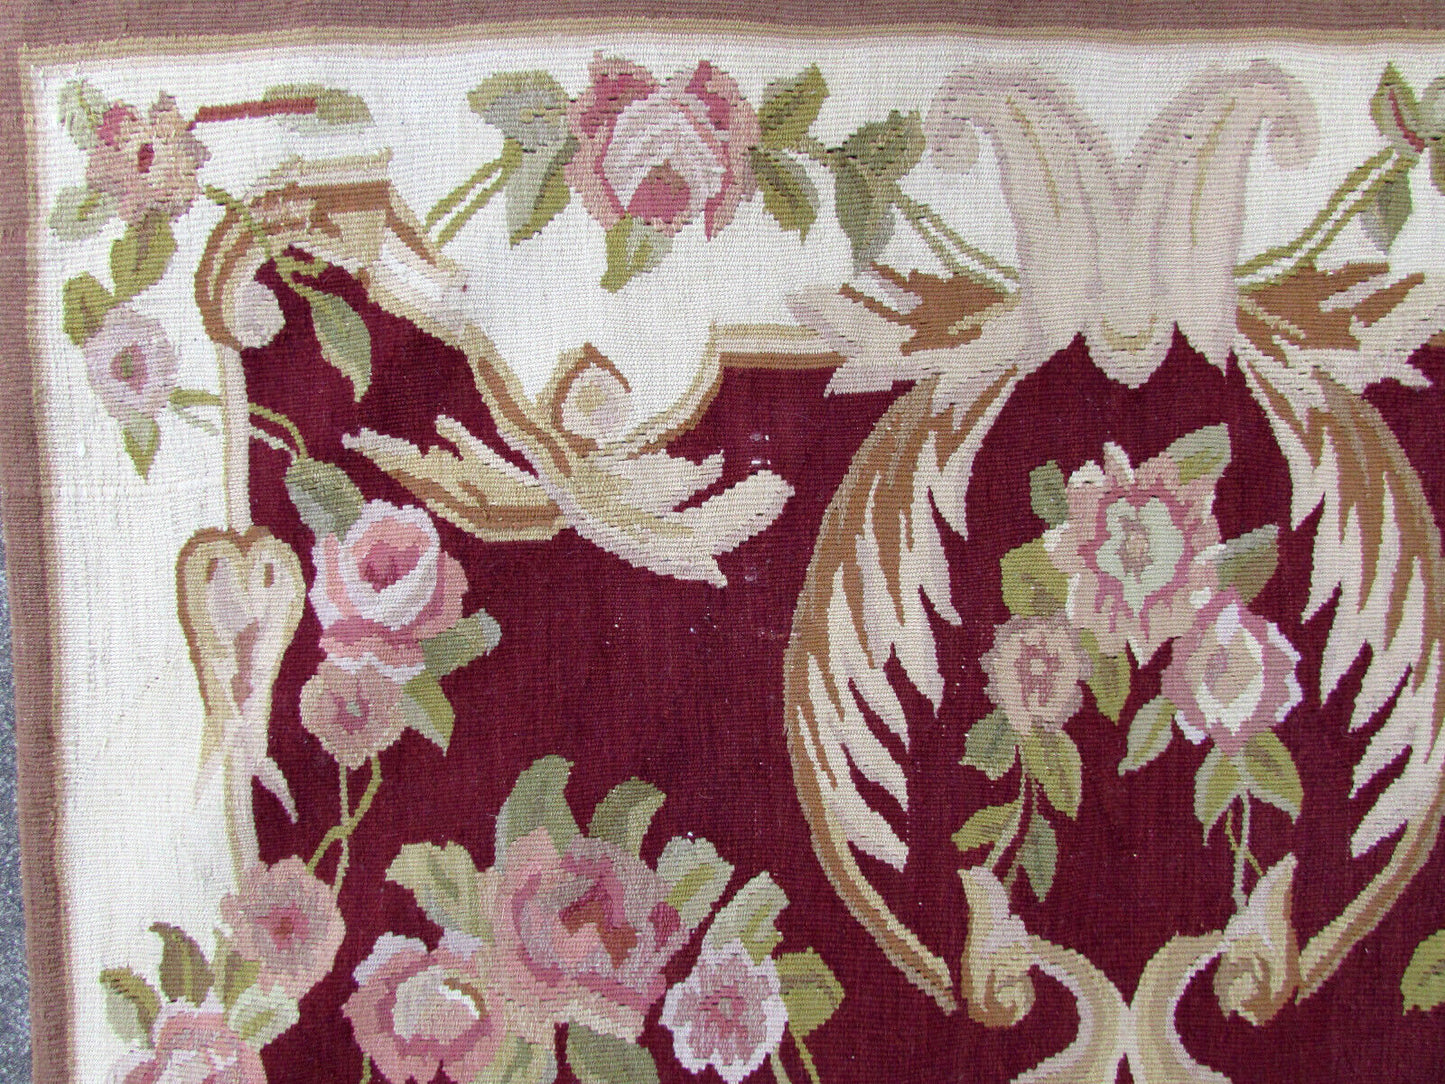 Exquisite textile art - Vintage Aubusson rug from the 1970s with unique craftsmanship.